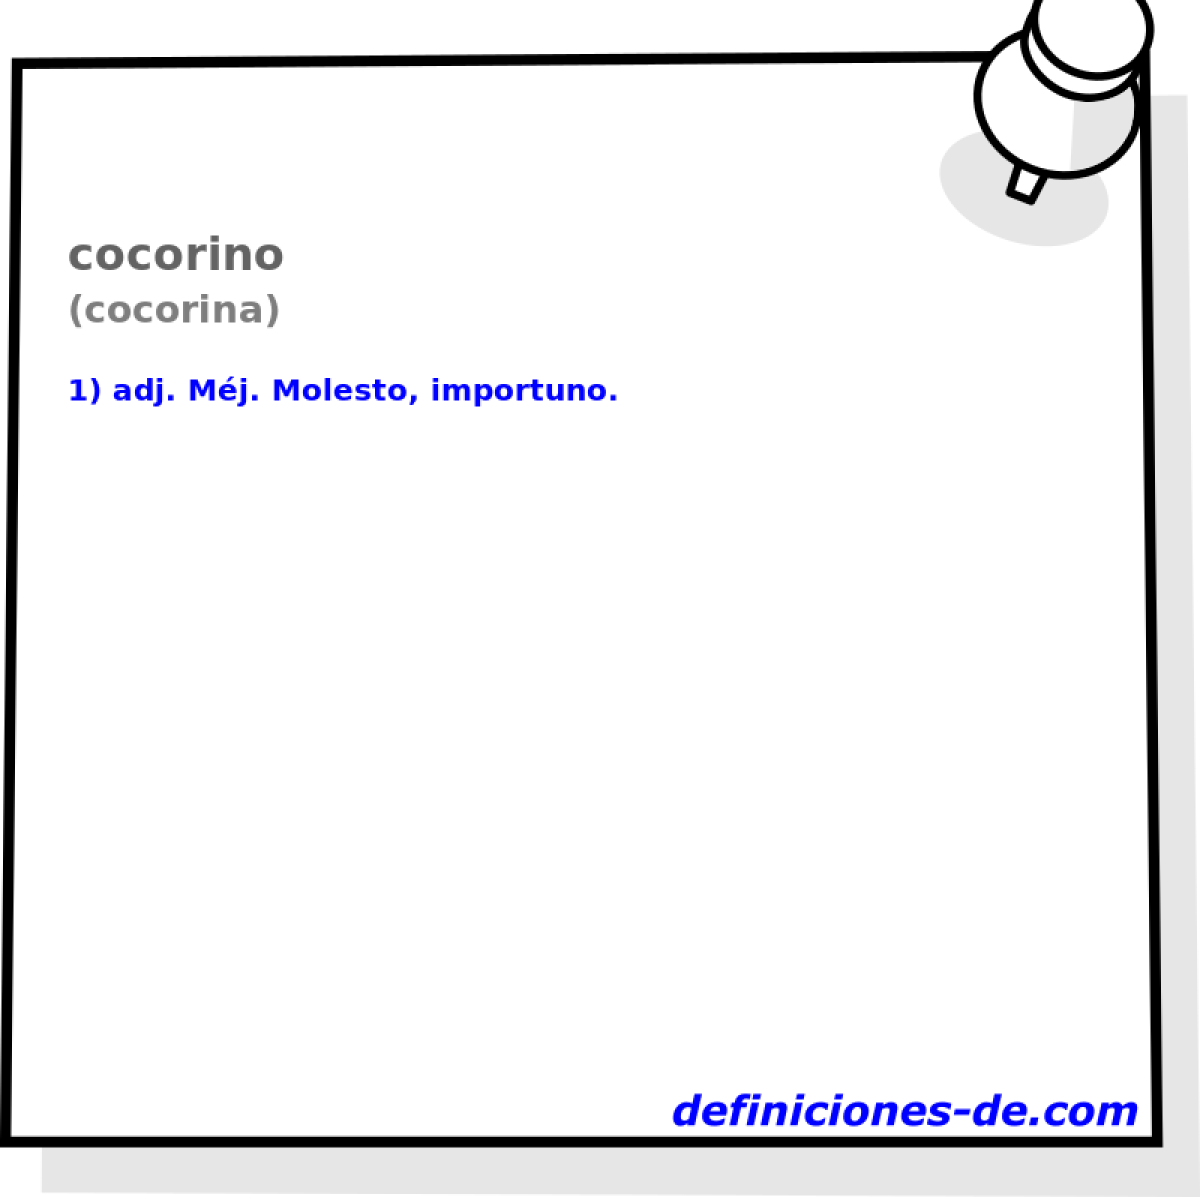 cocorino (cocorina)